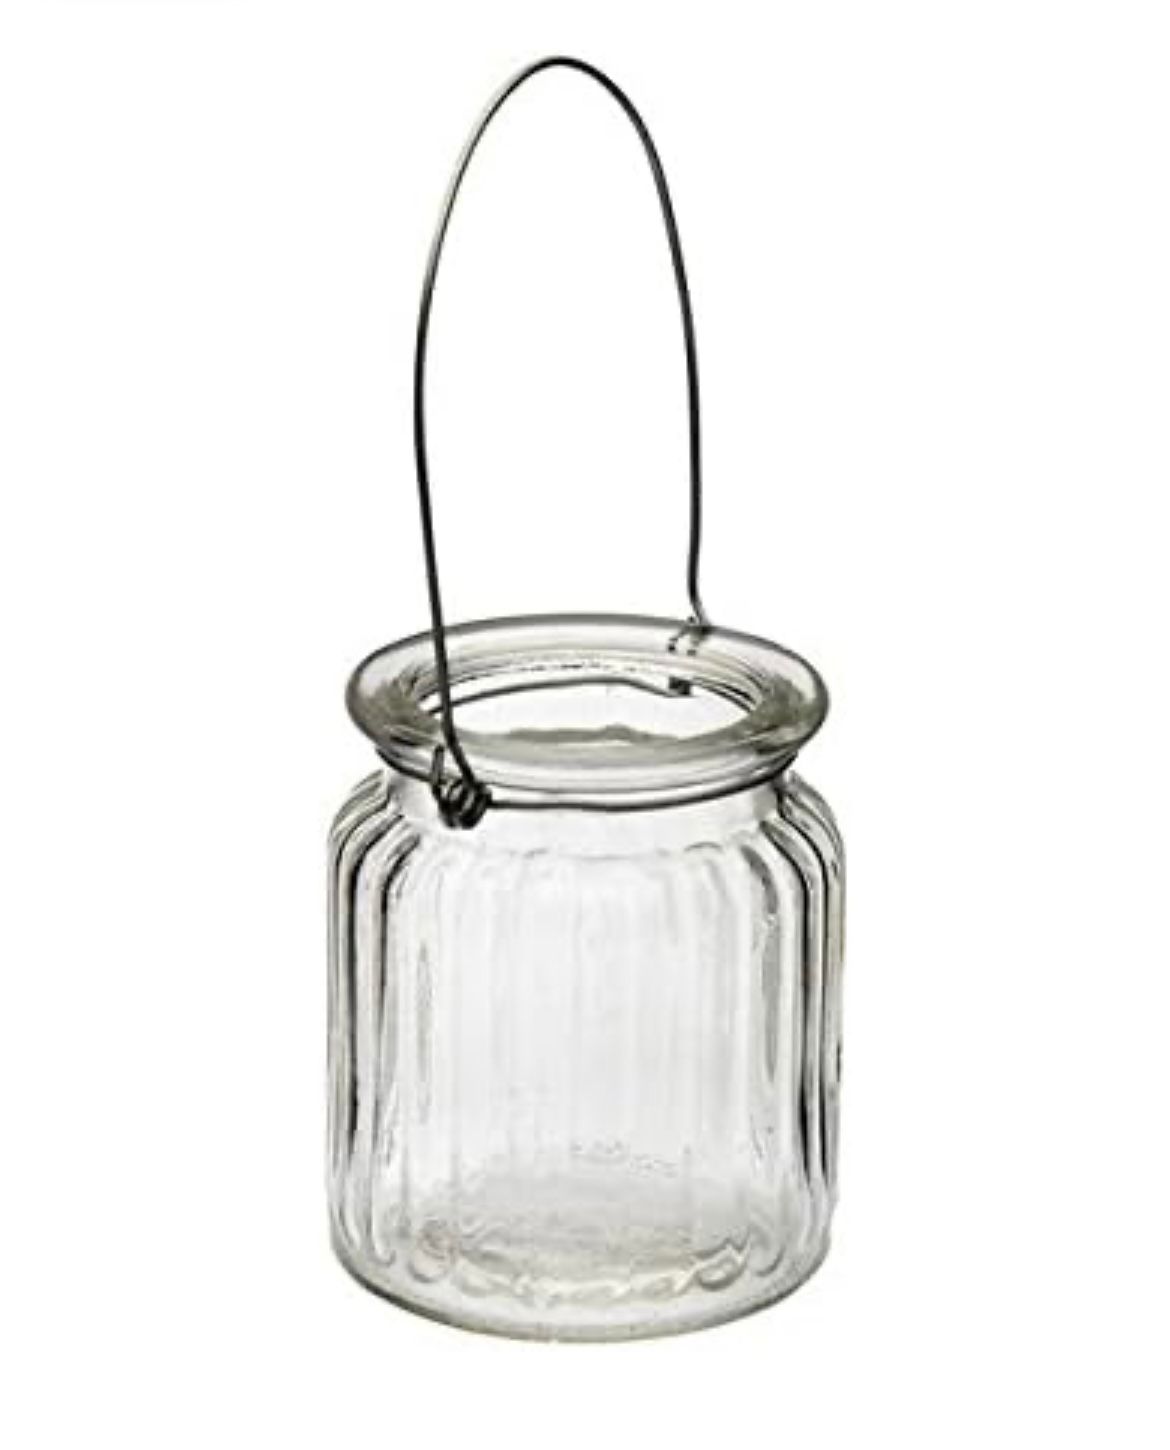 Twenty one glass ribbed hanging tea light holders - Image 2 of 2